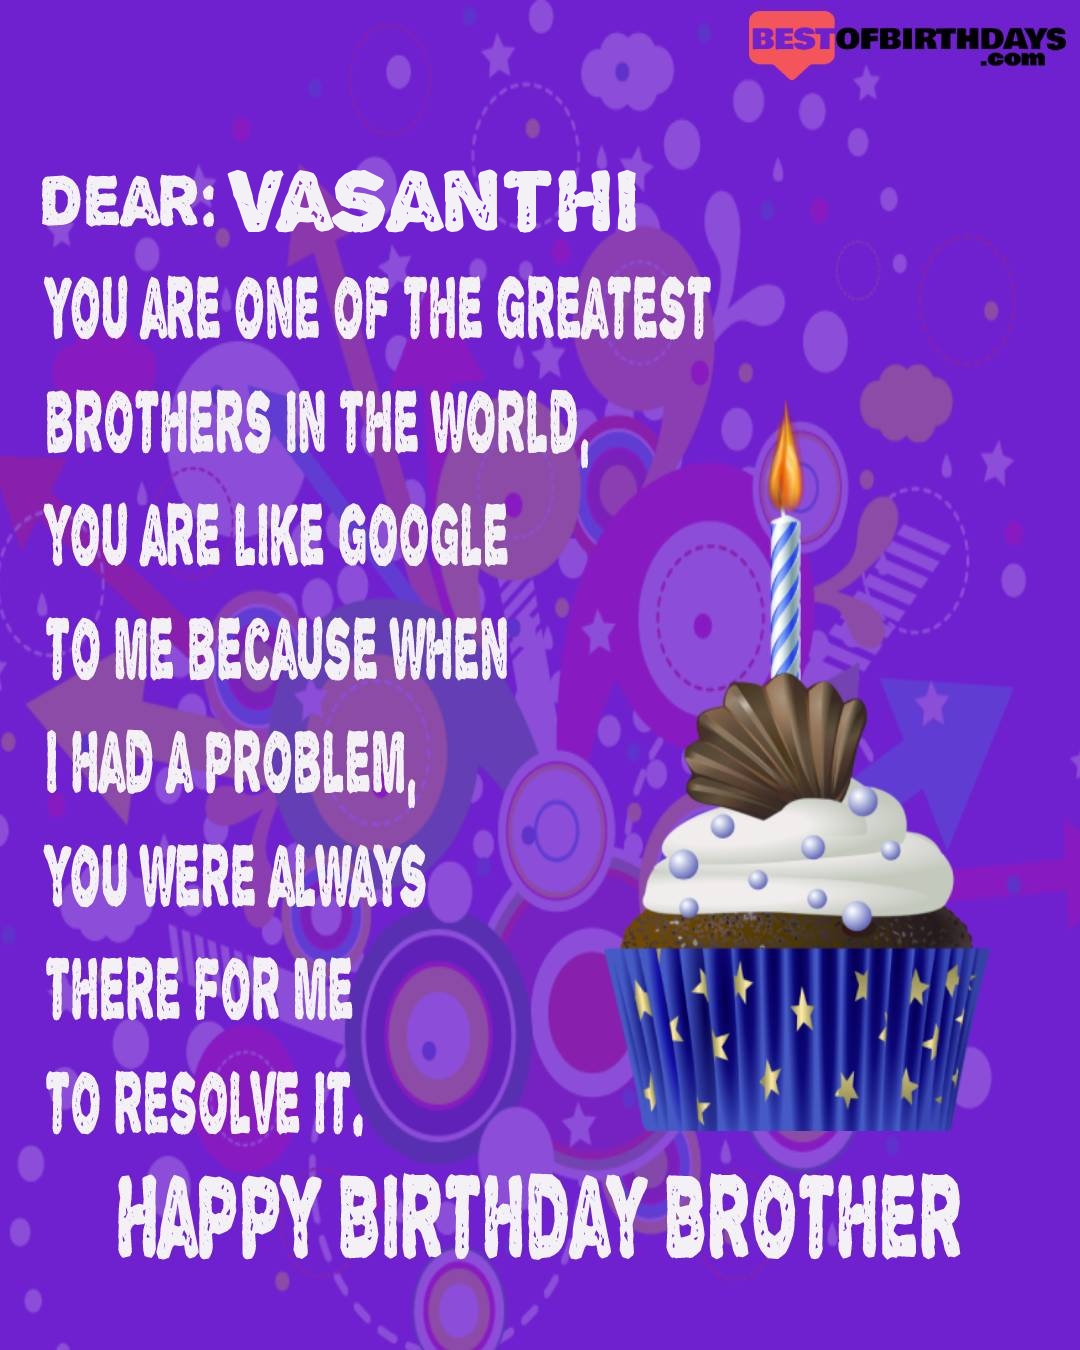 Happy birthday vasanthi bhai brother bro